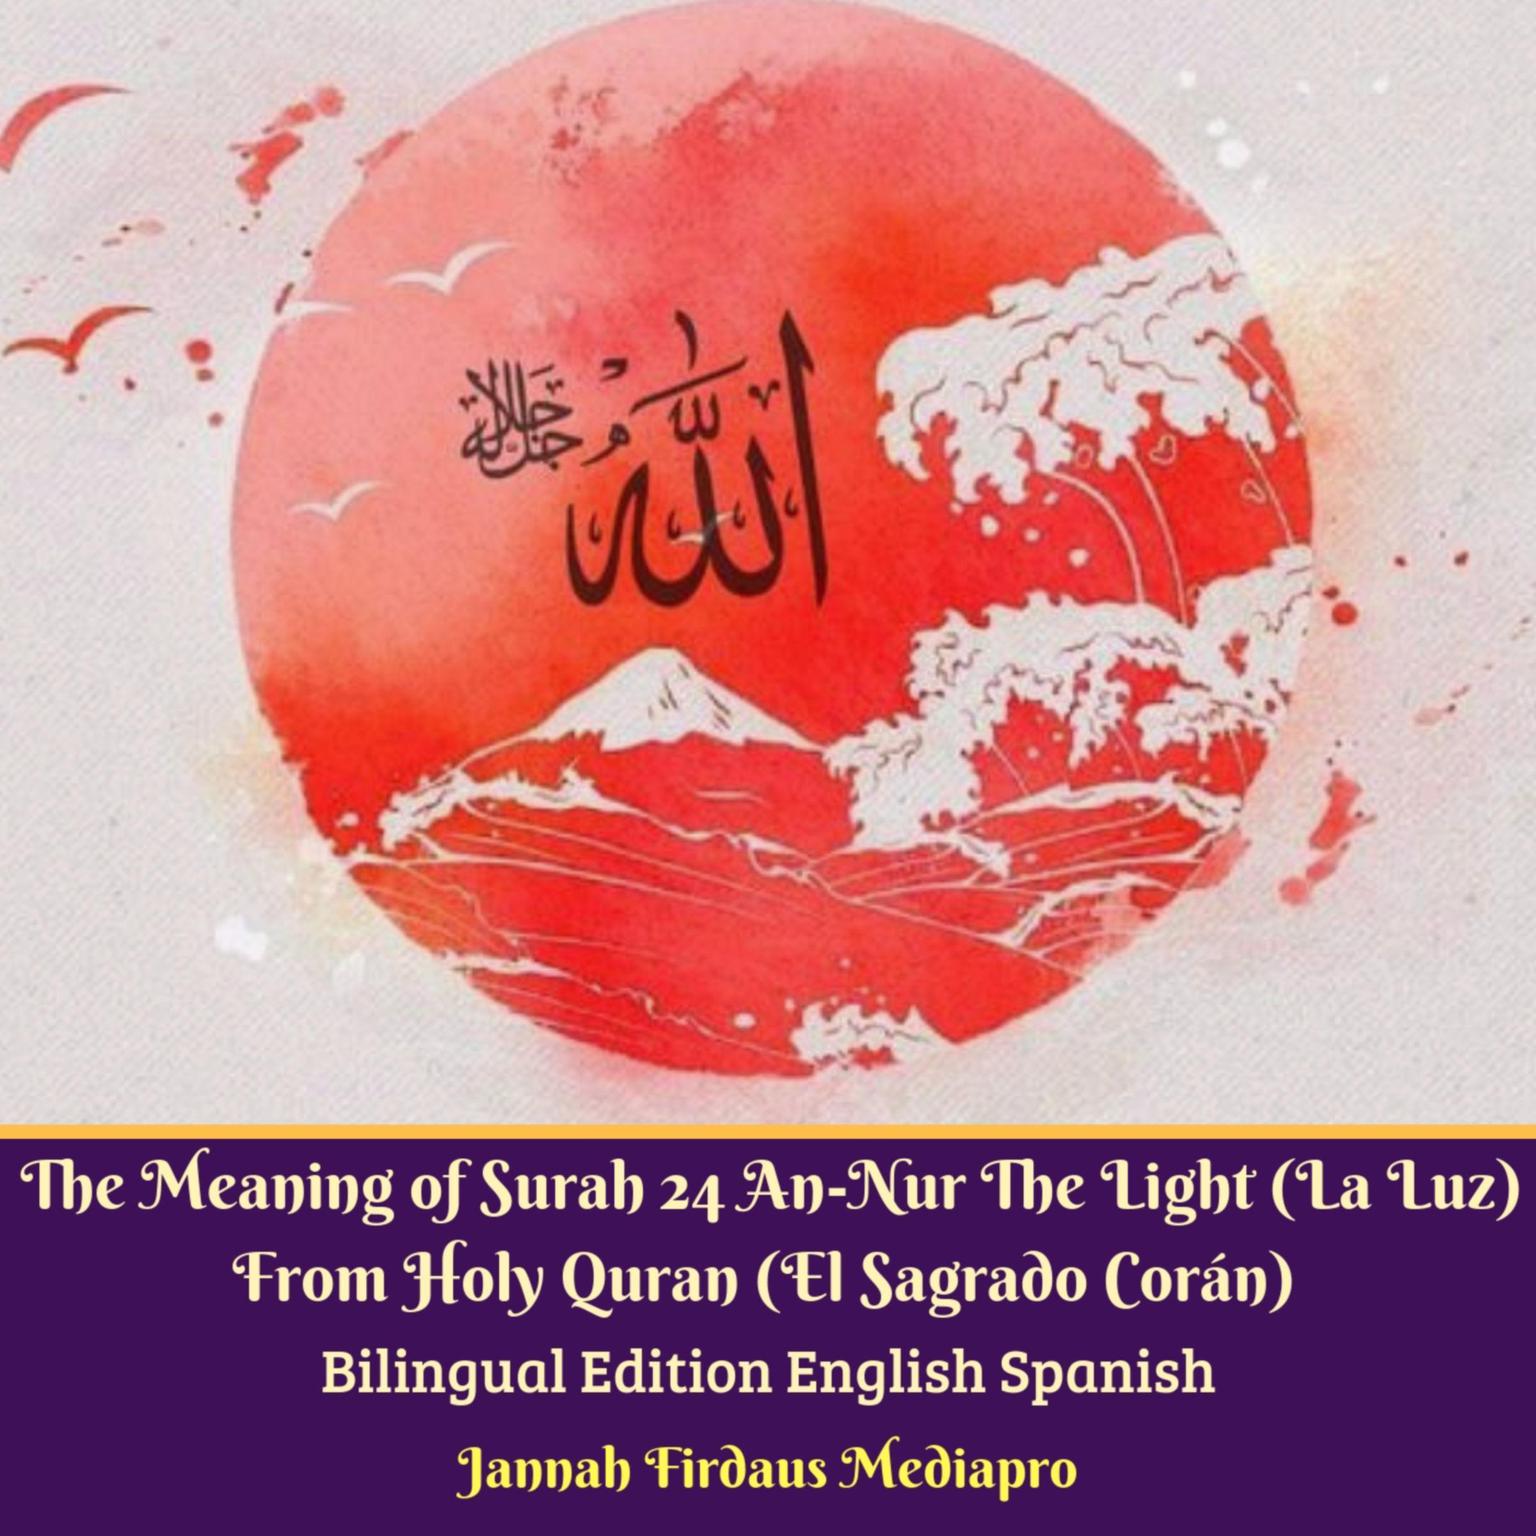 The Meaning of Surah 24 An-Nur The Light (La Luz) From Holy Quran (El Sagrado Corán) Bilingual Edition English Spanish Audiobook, by Jannah Firdaus Foundation